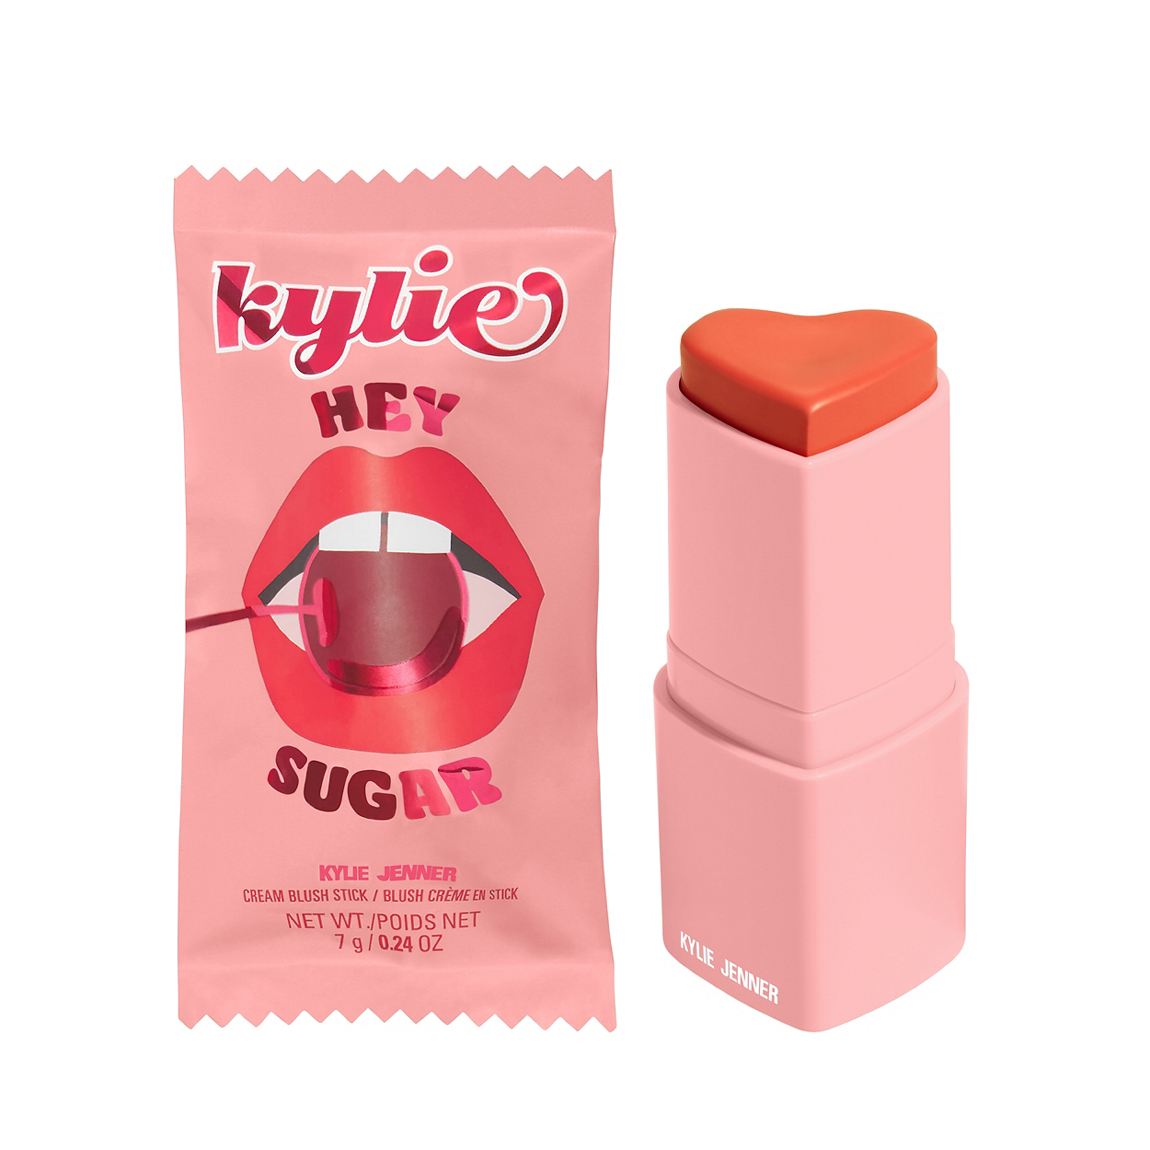 Valentine's Hey Sugar Blush Stick